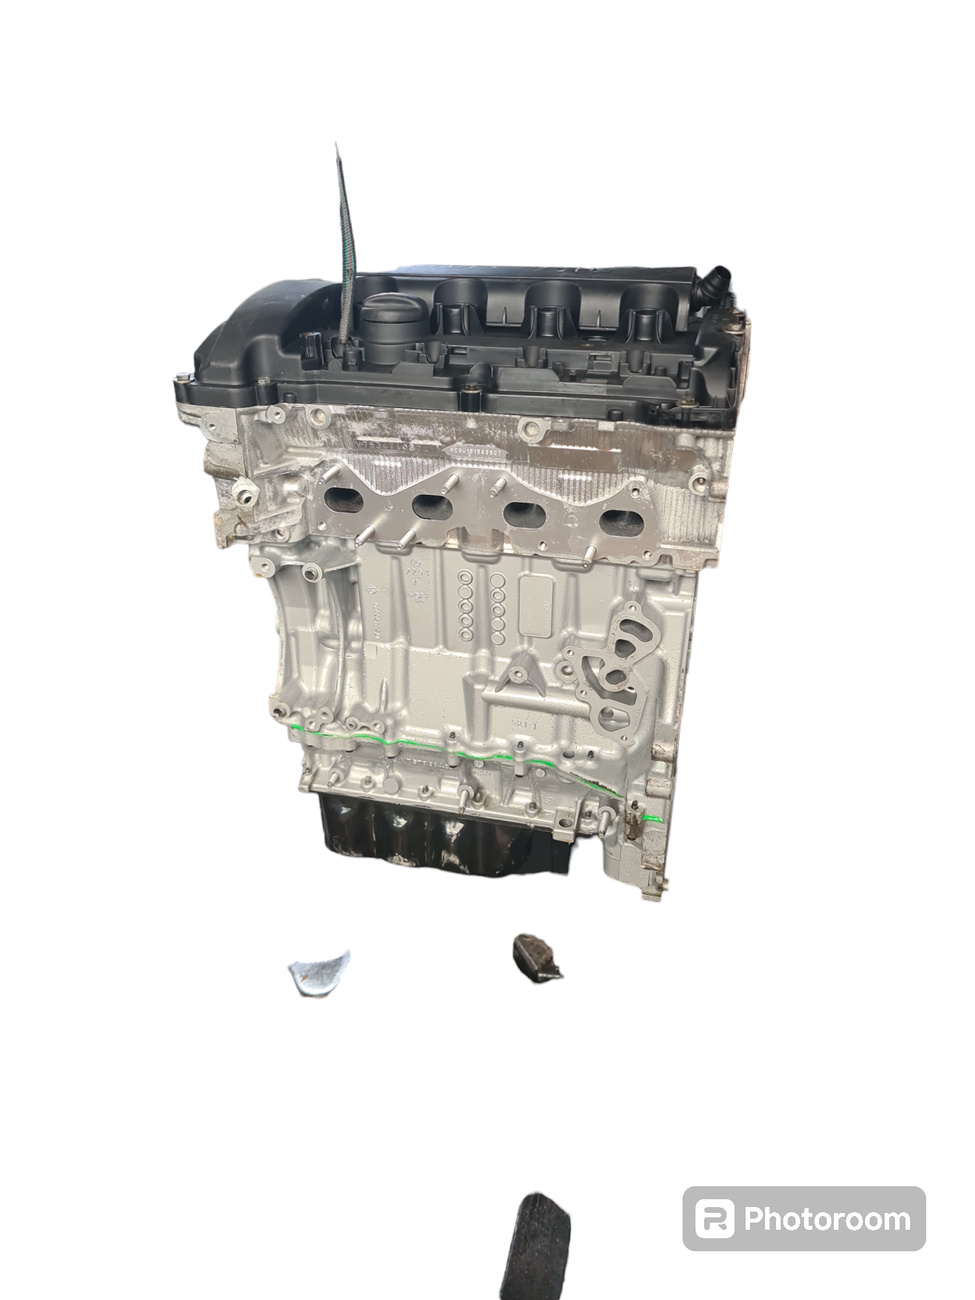 Motore Revisionato 5F02 N14B16A Peugeot 308 anno 2014 1.6 tbz Peugeot - Mini